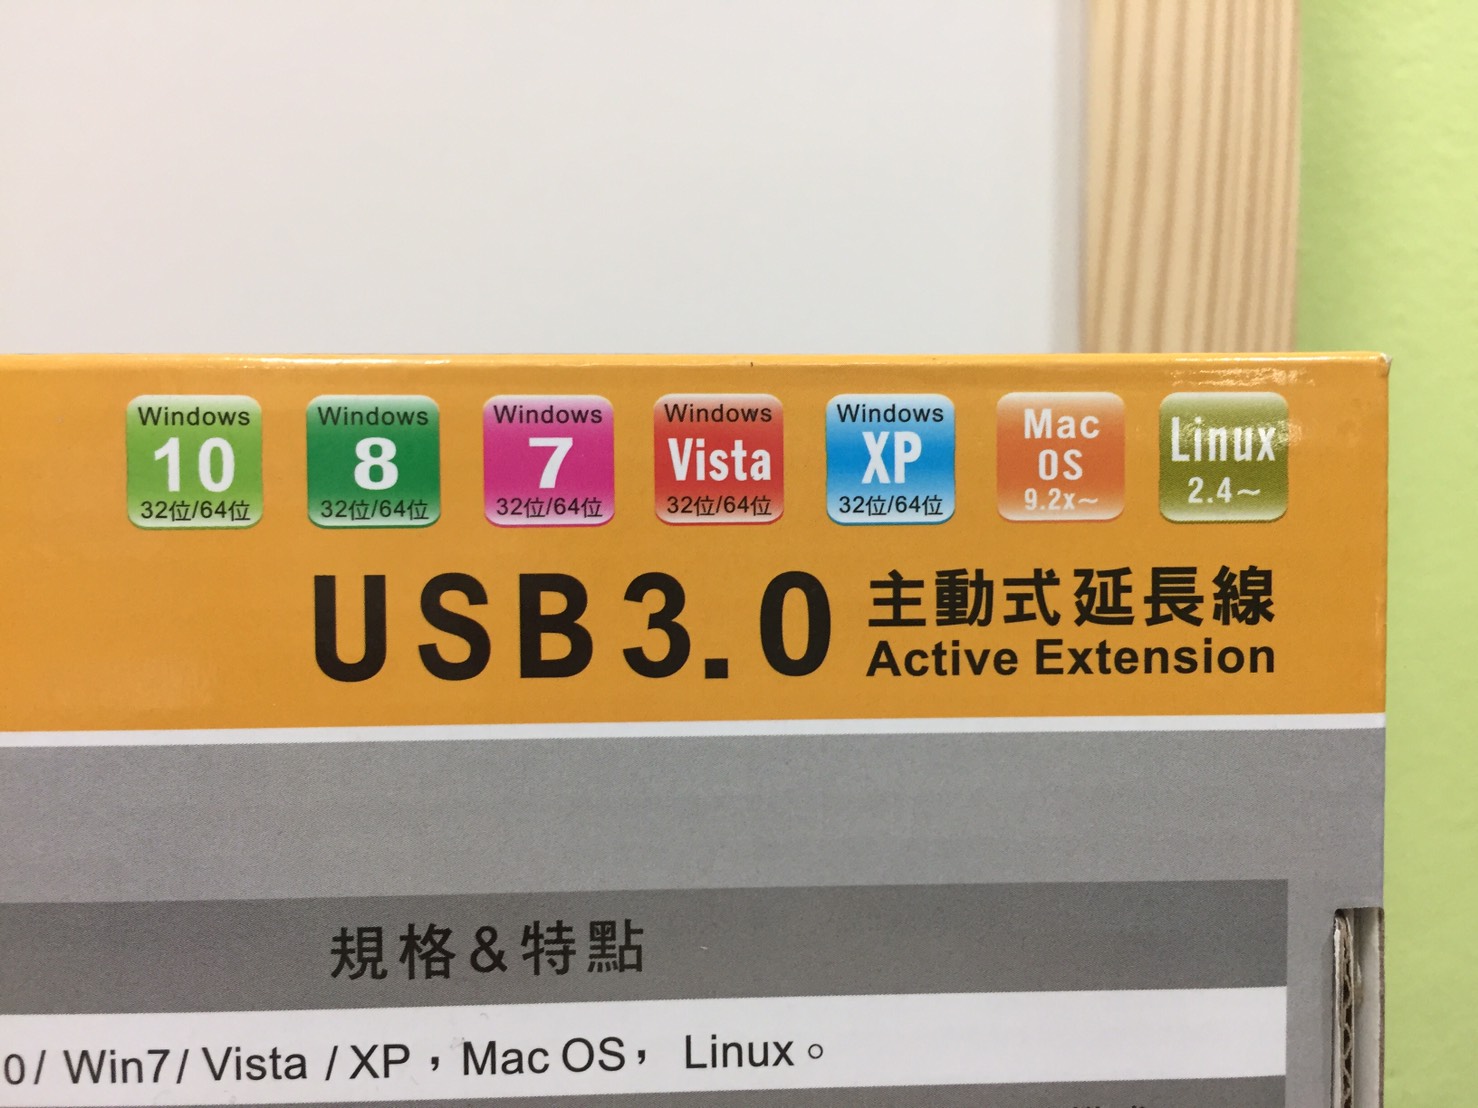 USB3.0 Extension 20M